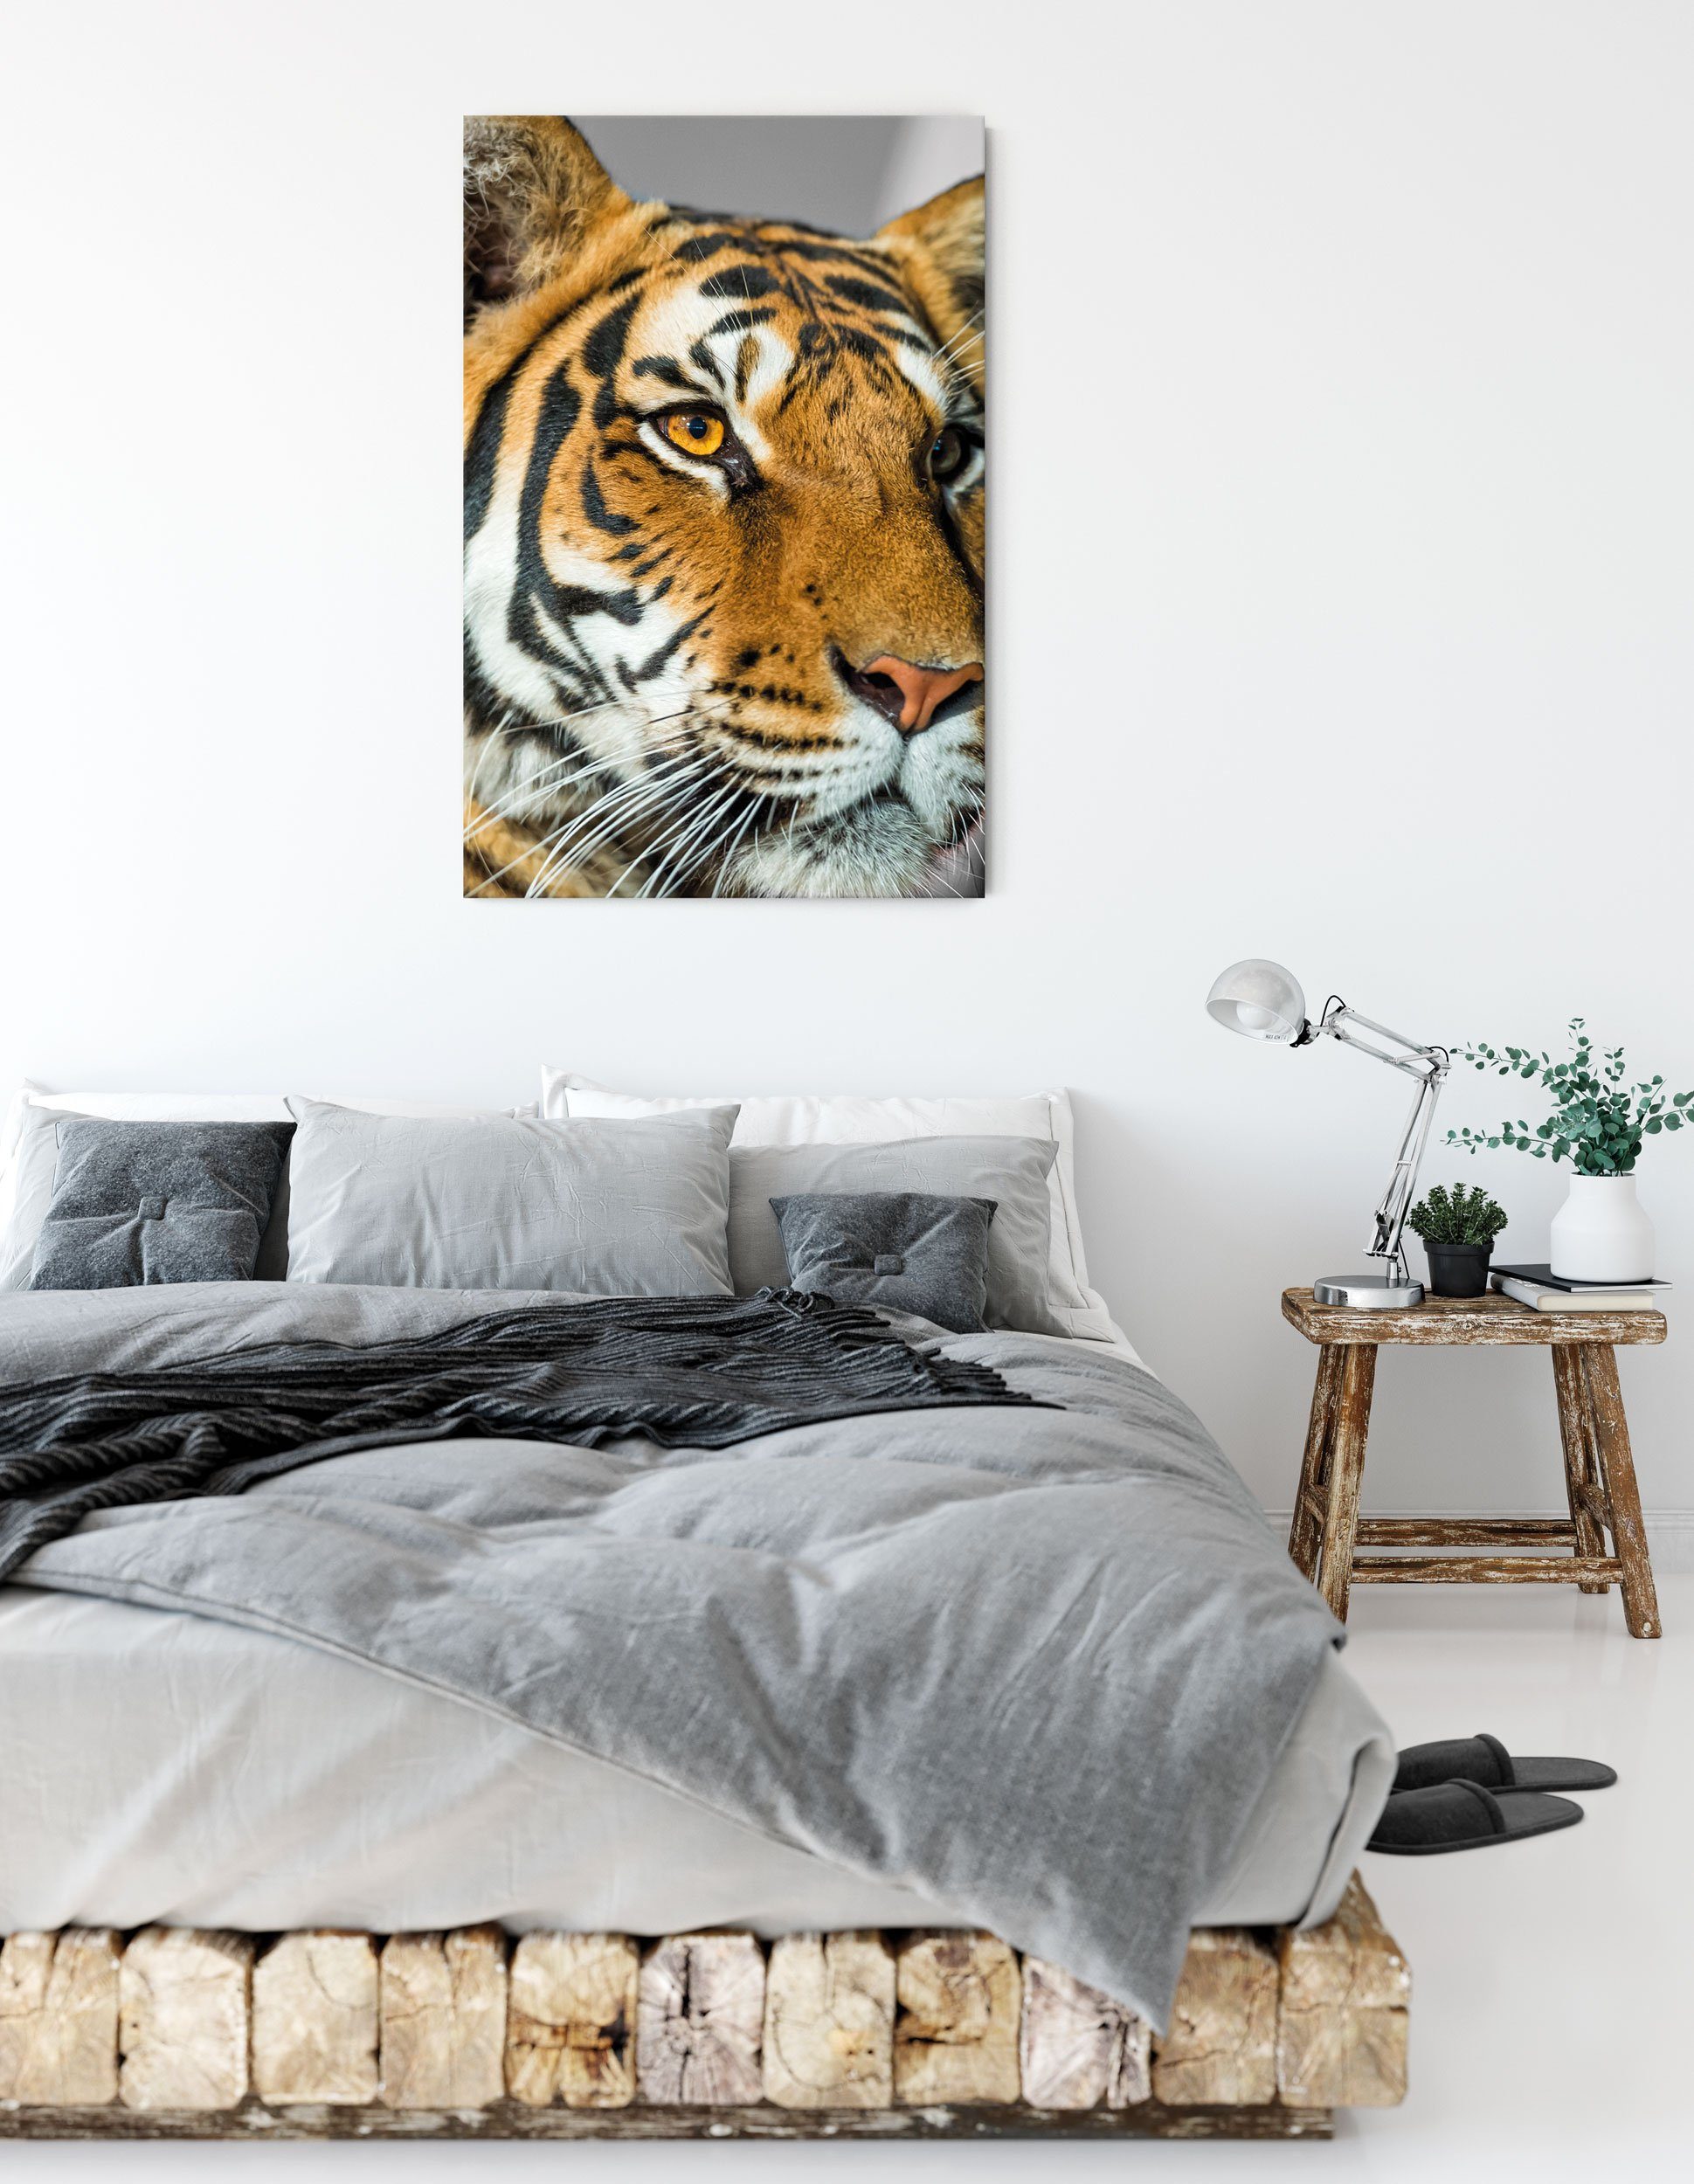 Pixxprint Leinwandbild bildschöner Tiger, bildschöner bespannt, (1 Zackenaufhänger Leinwandbild fertig St), inkl. Tiger